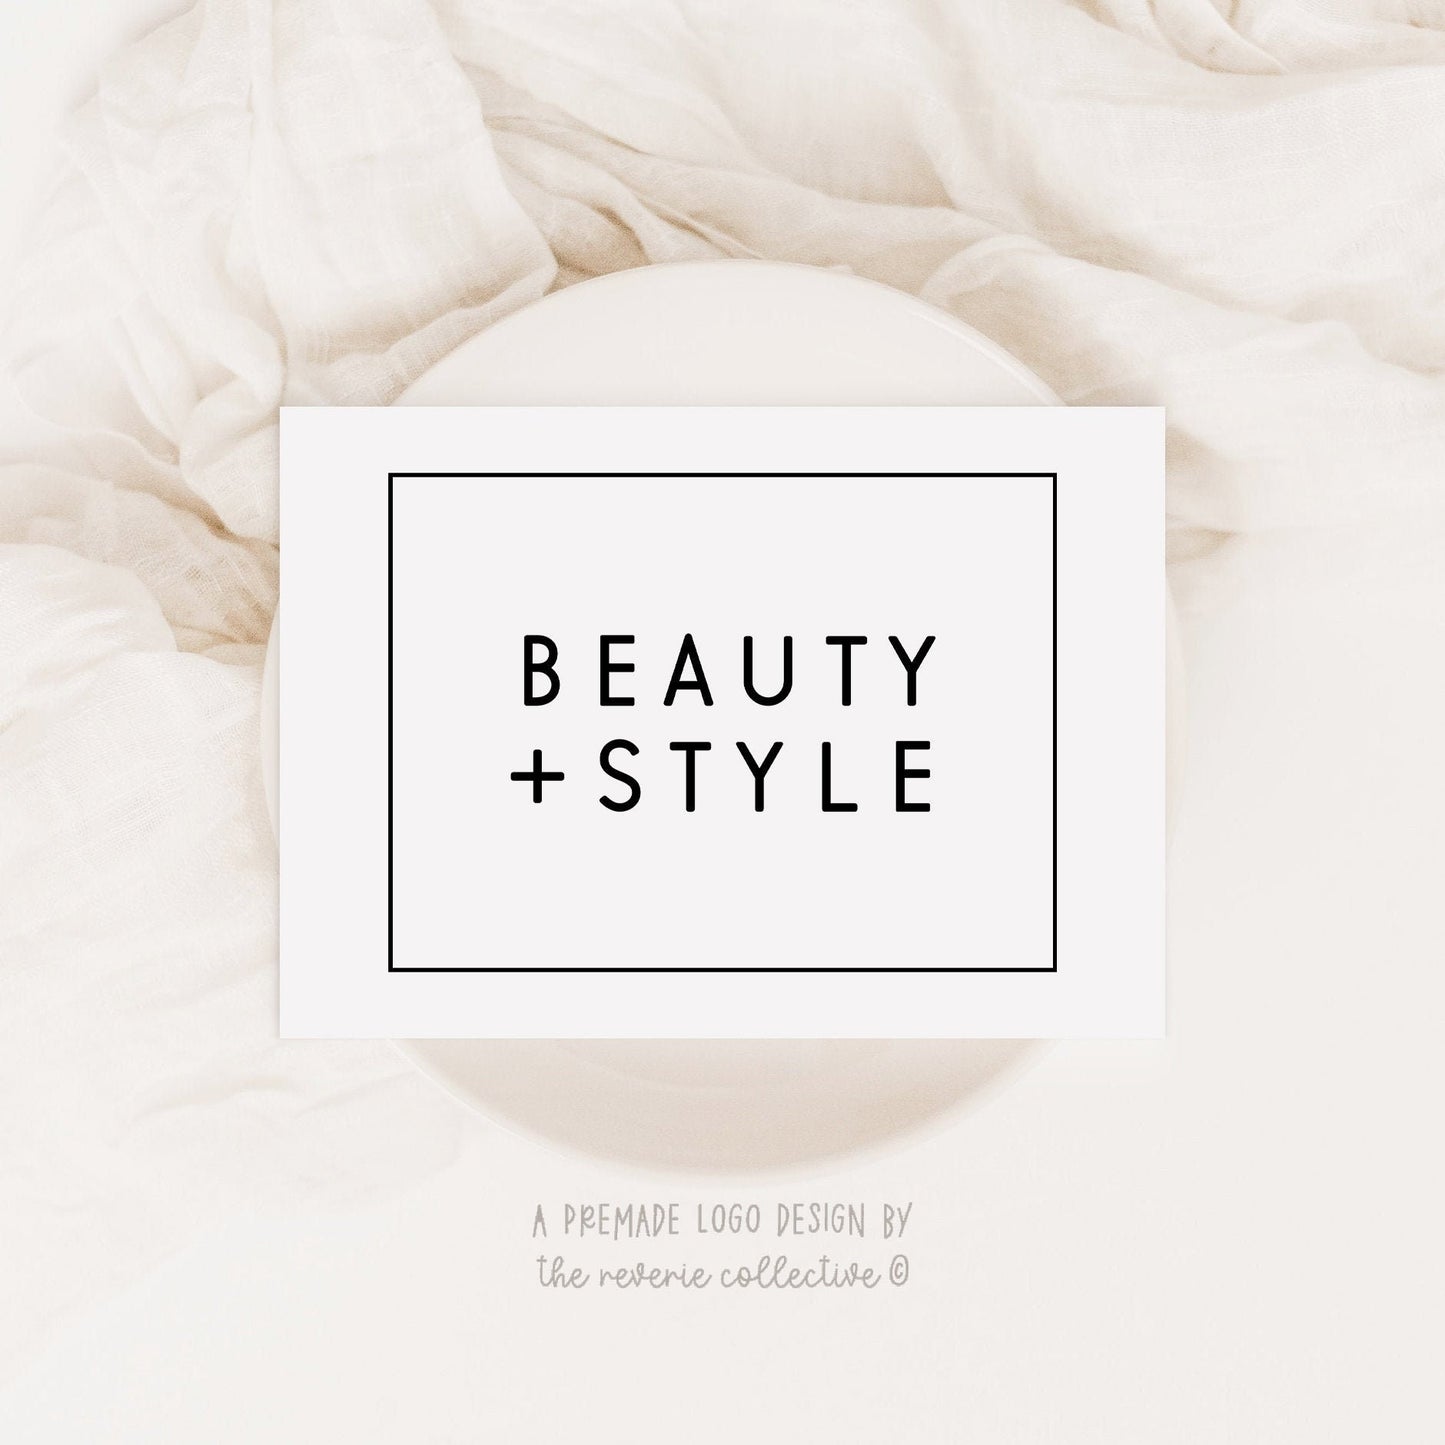 Beauty + Style | Premade Logo Design | Minimal, Square, Black & White, Classic